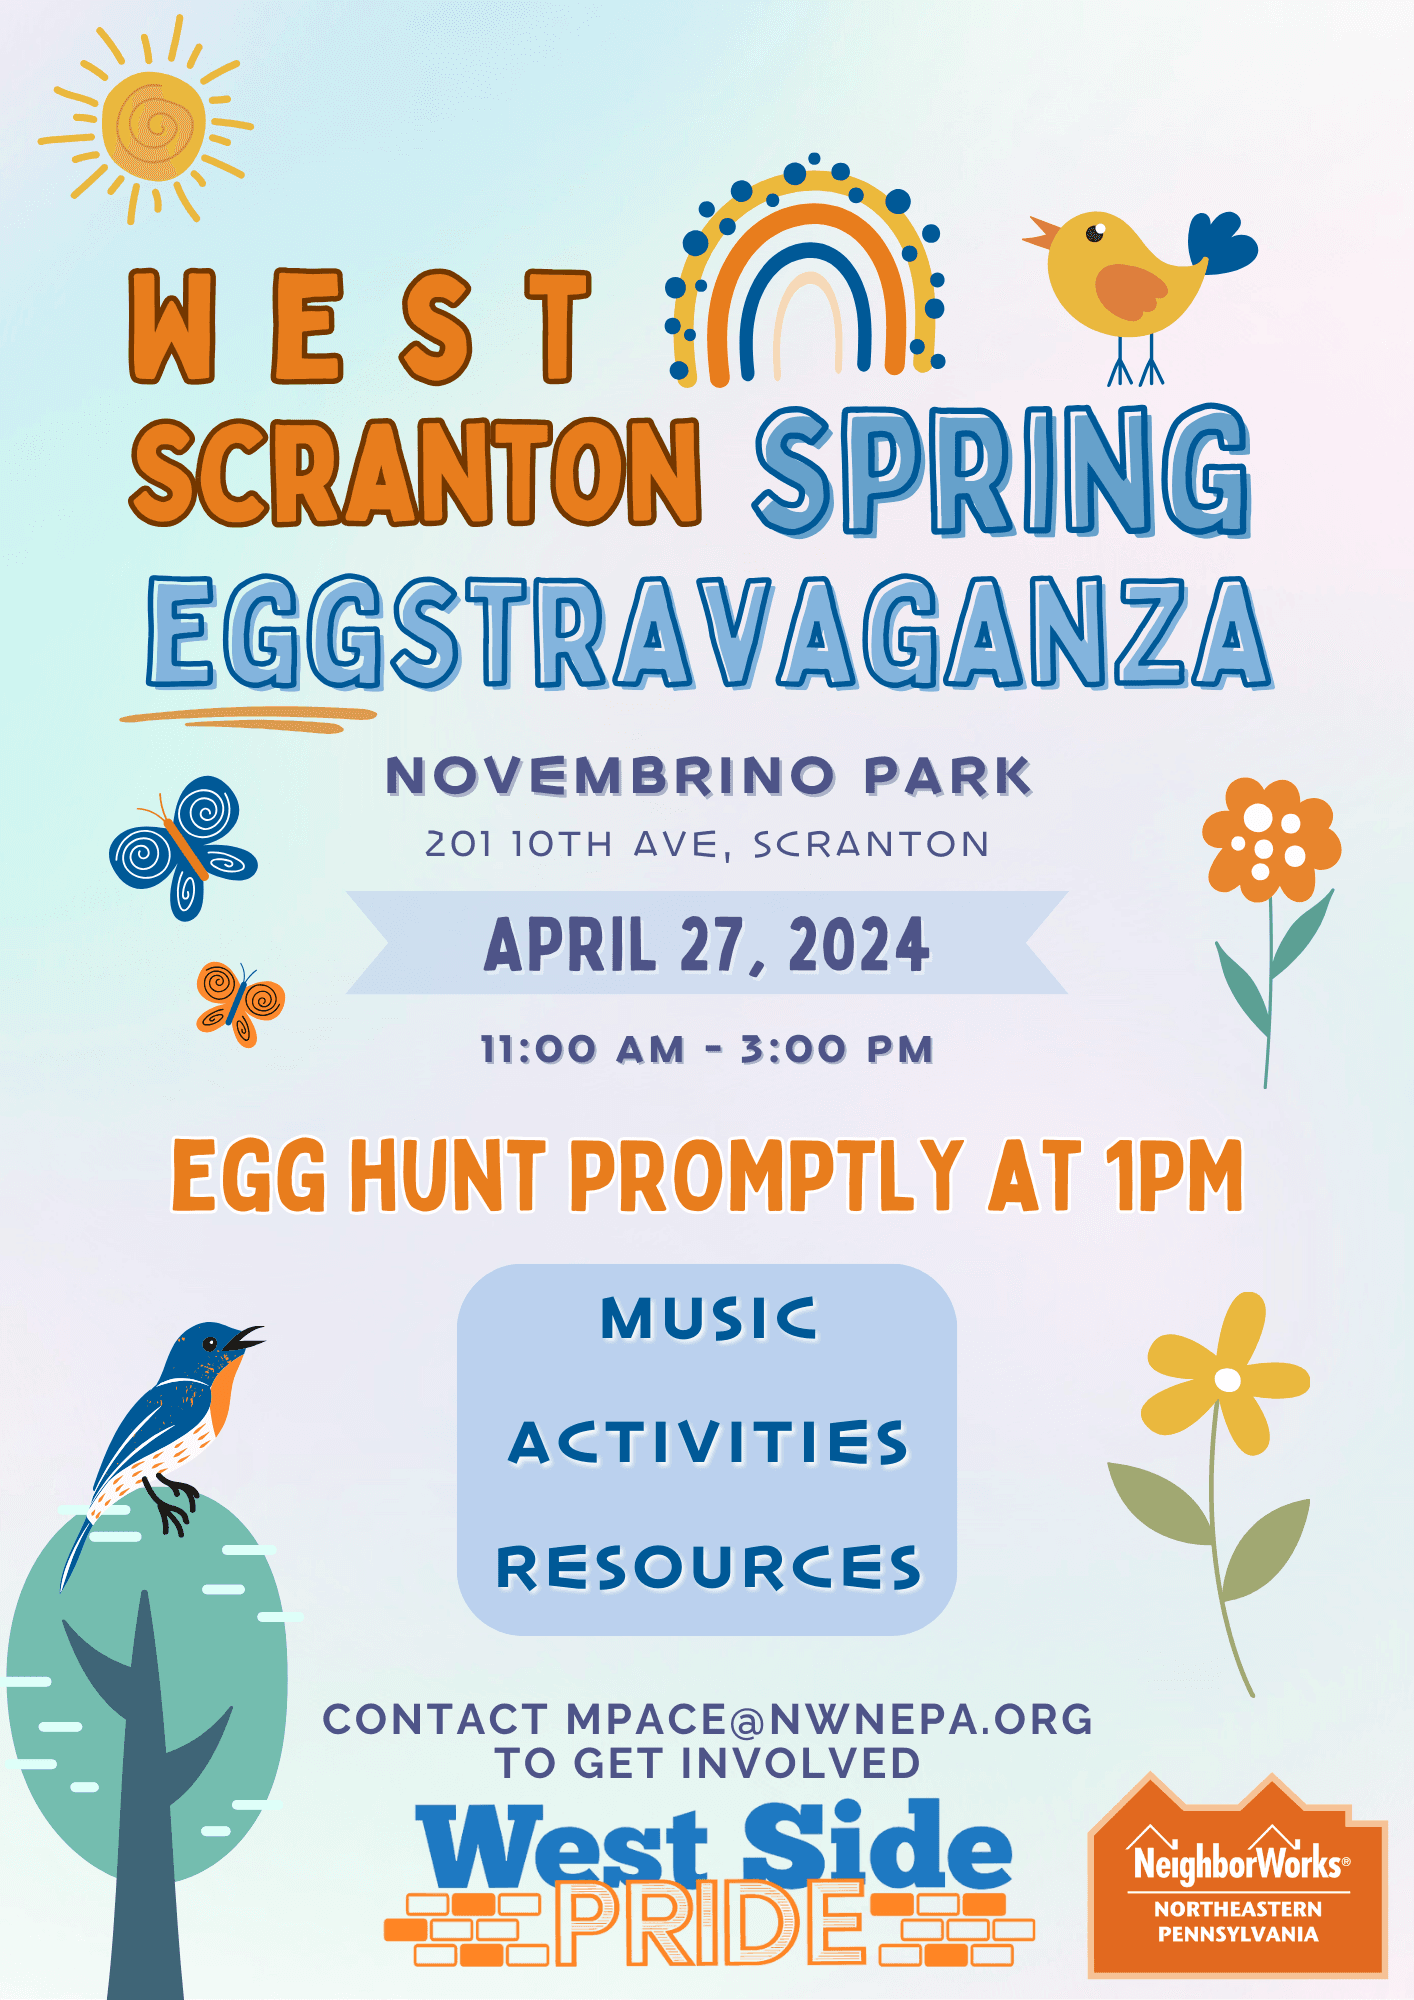 NeighborWorks kicks off slate of West Scranton events with Spring EGGstravaganza